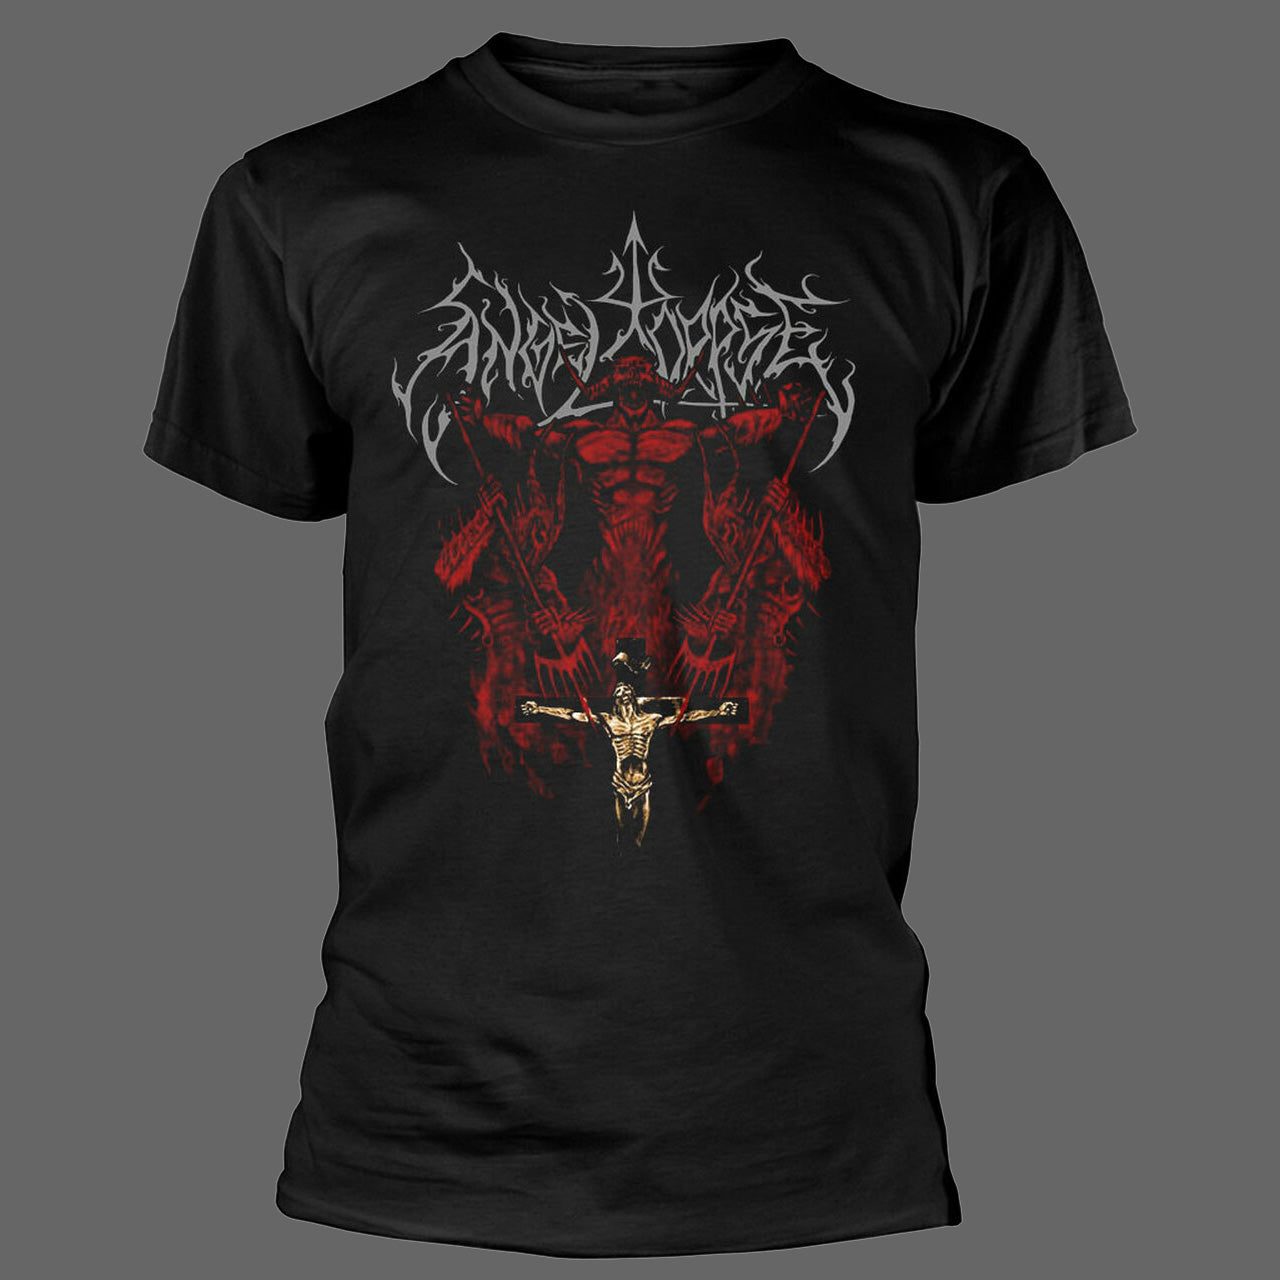 Angelcorpse - Christhammer (T-Shirt)